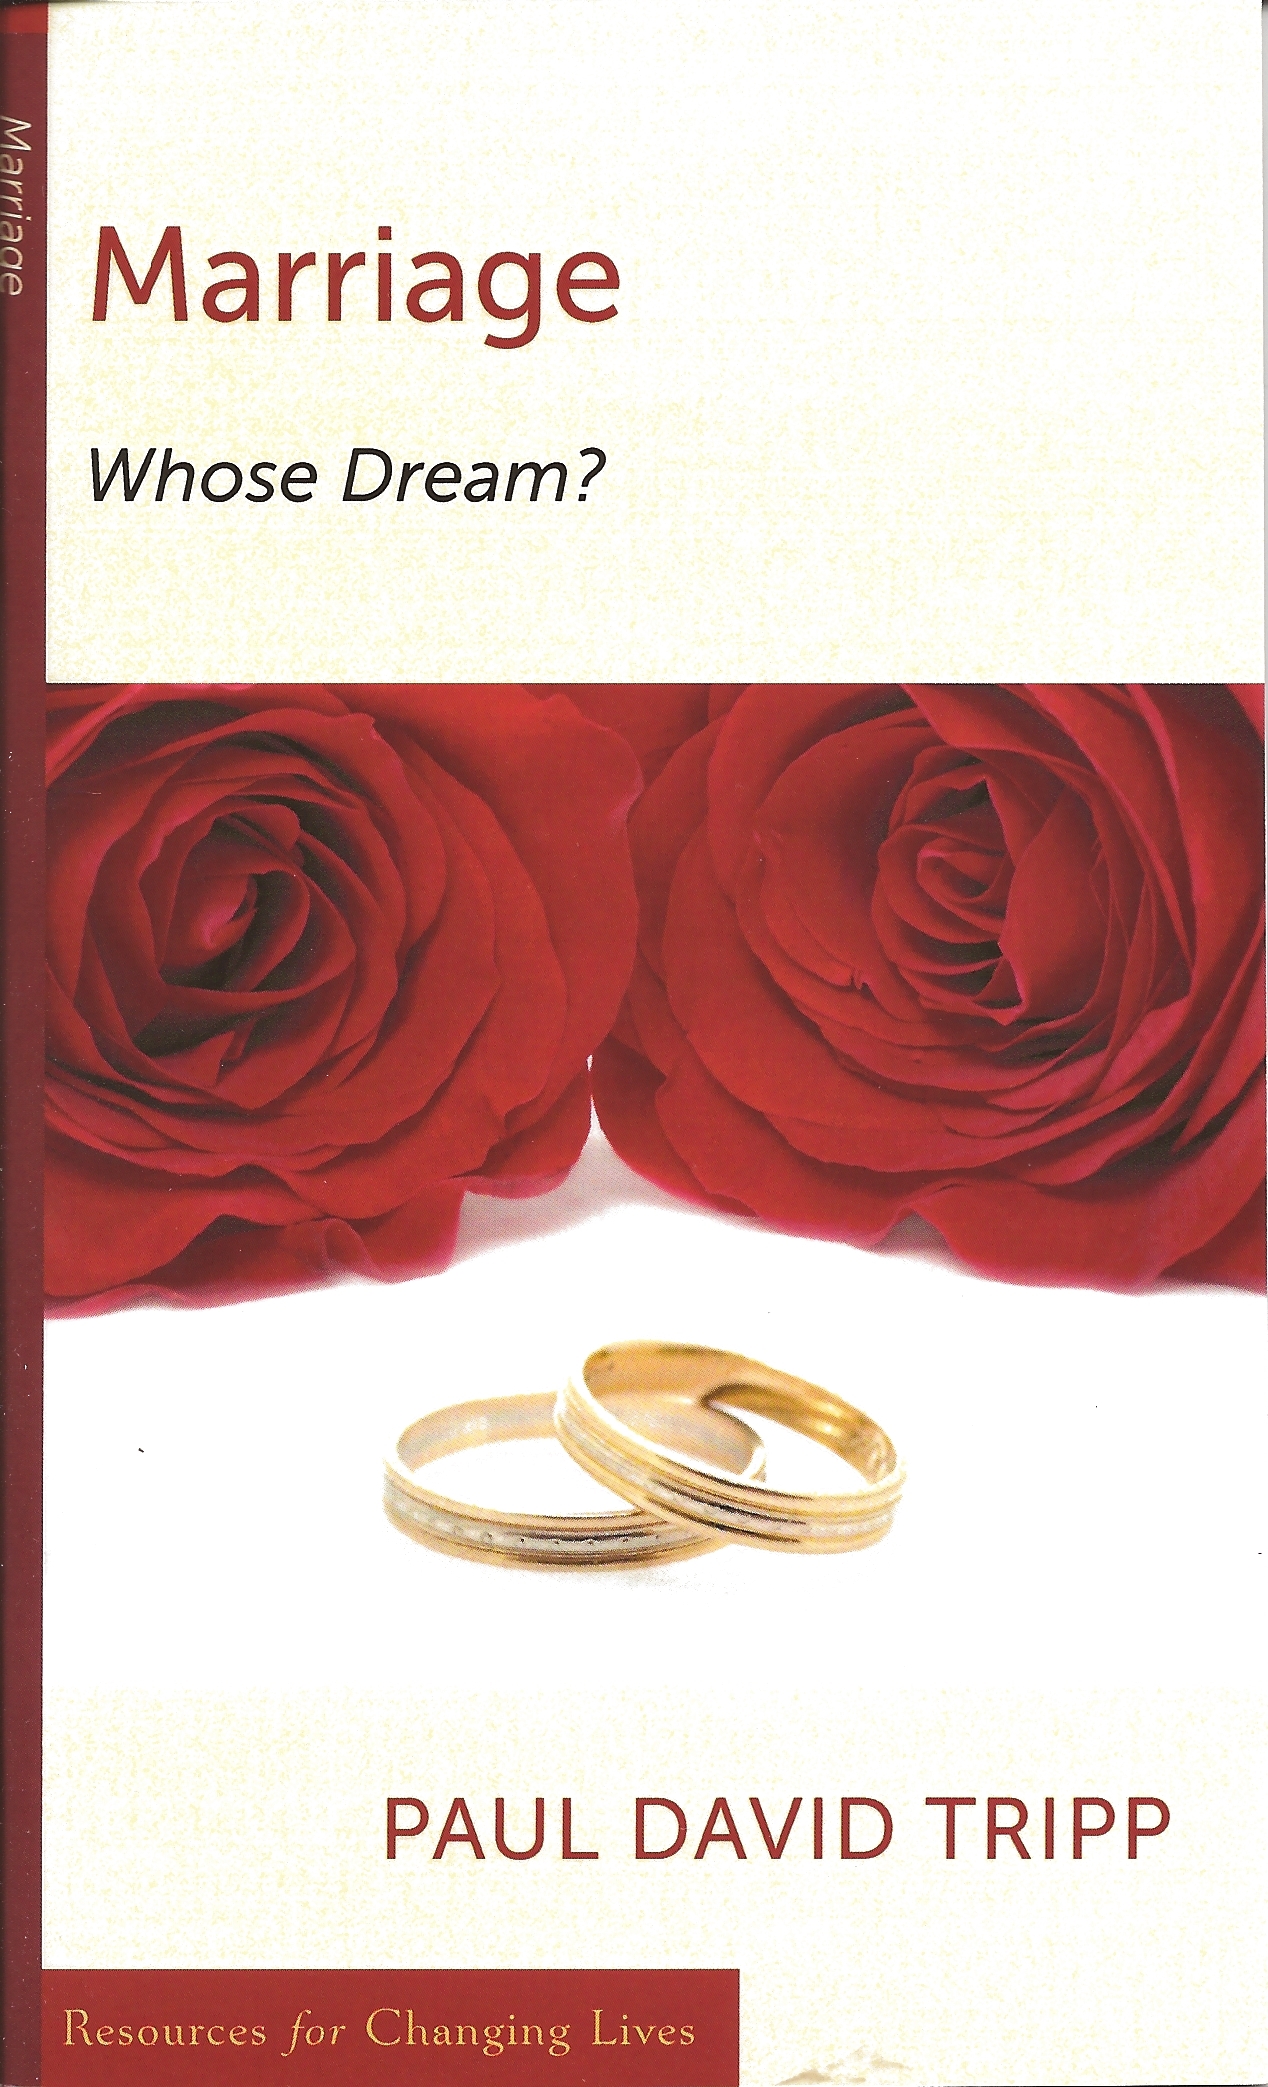 MARRIAGE: WHOSE DREAM? Paul David Tripp